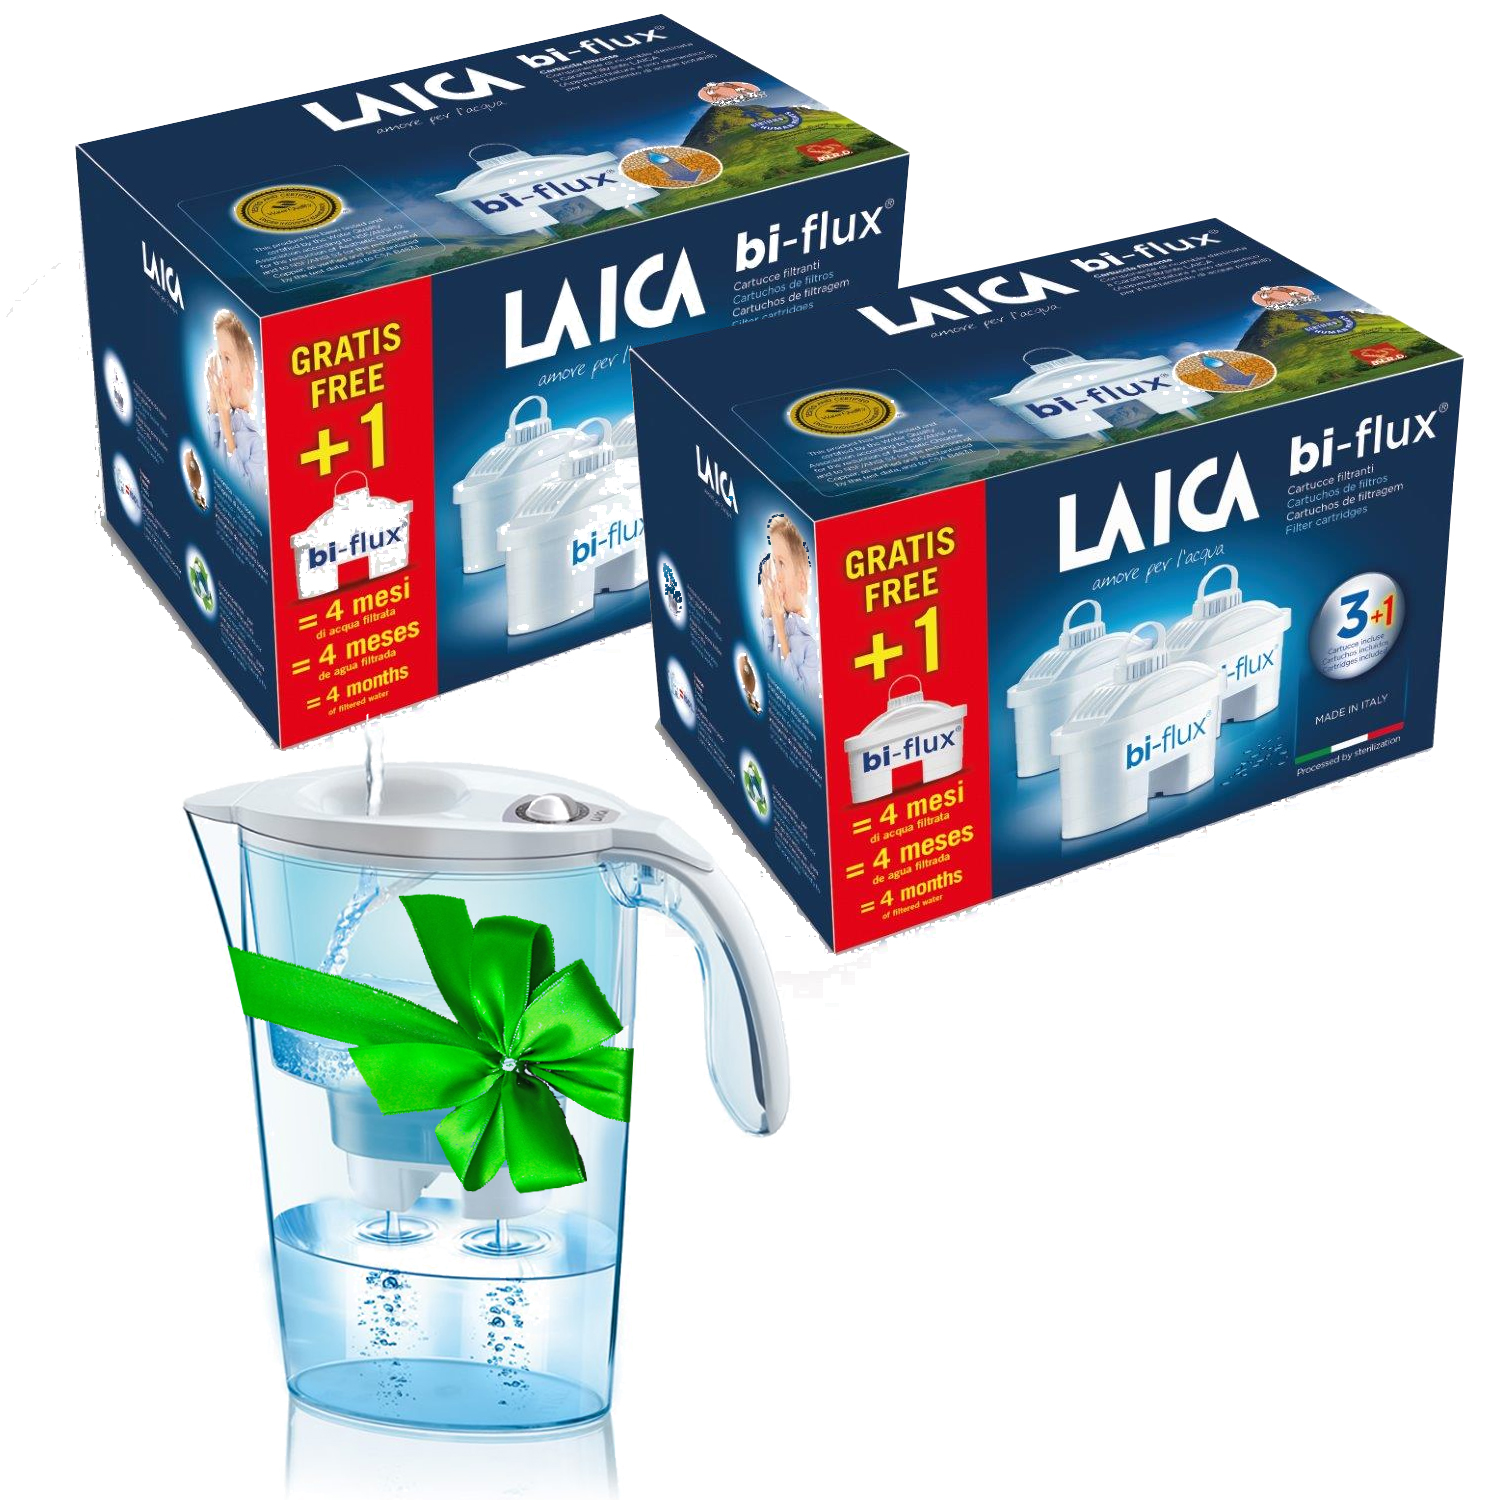 Laica - Laica Pack 8 Filtros Bi-flux para Mejorar el Sabor del Agua y Reducir la Cal + Jarra Depuradora 2L